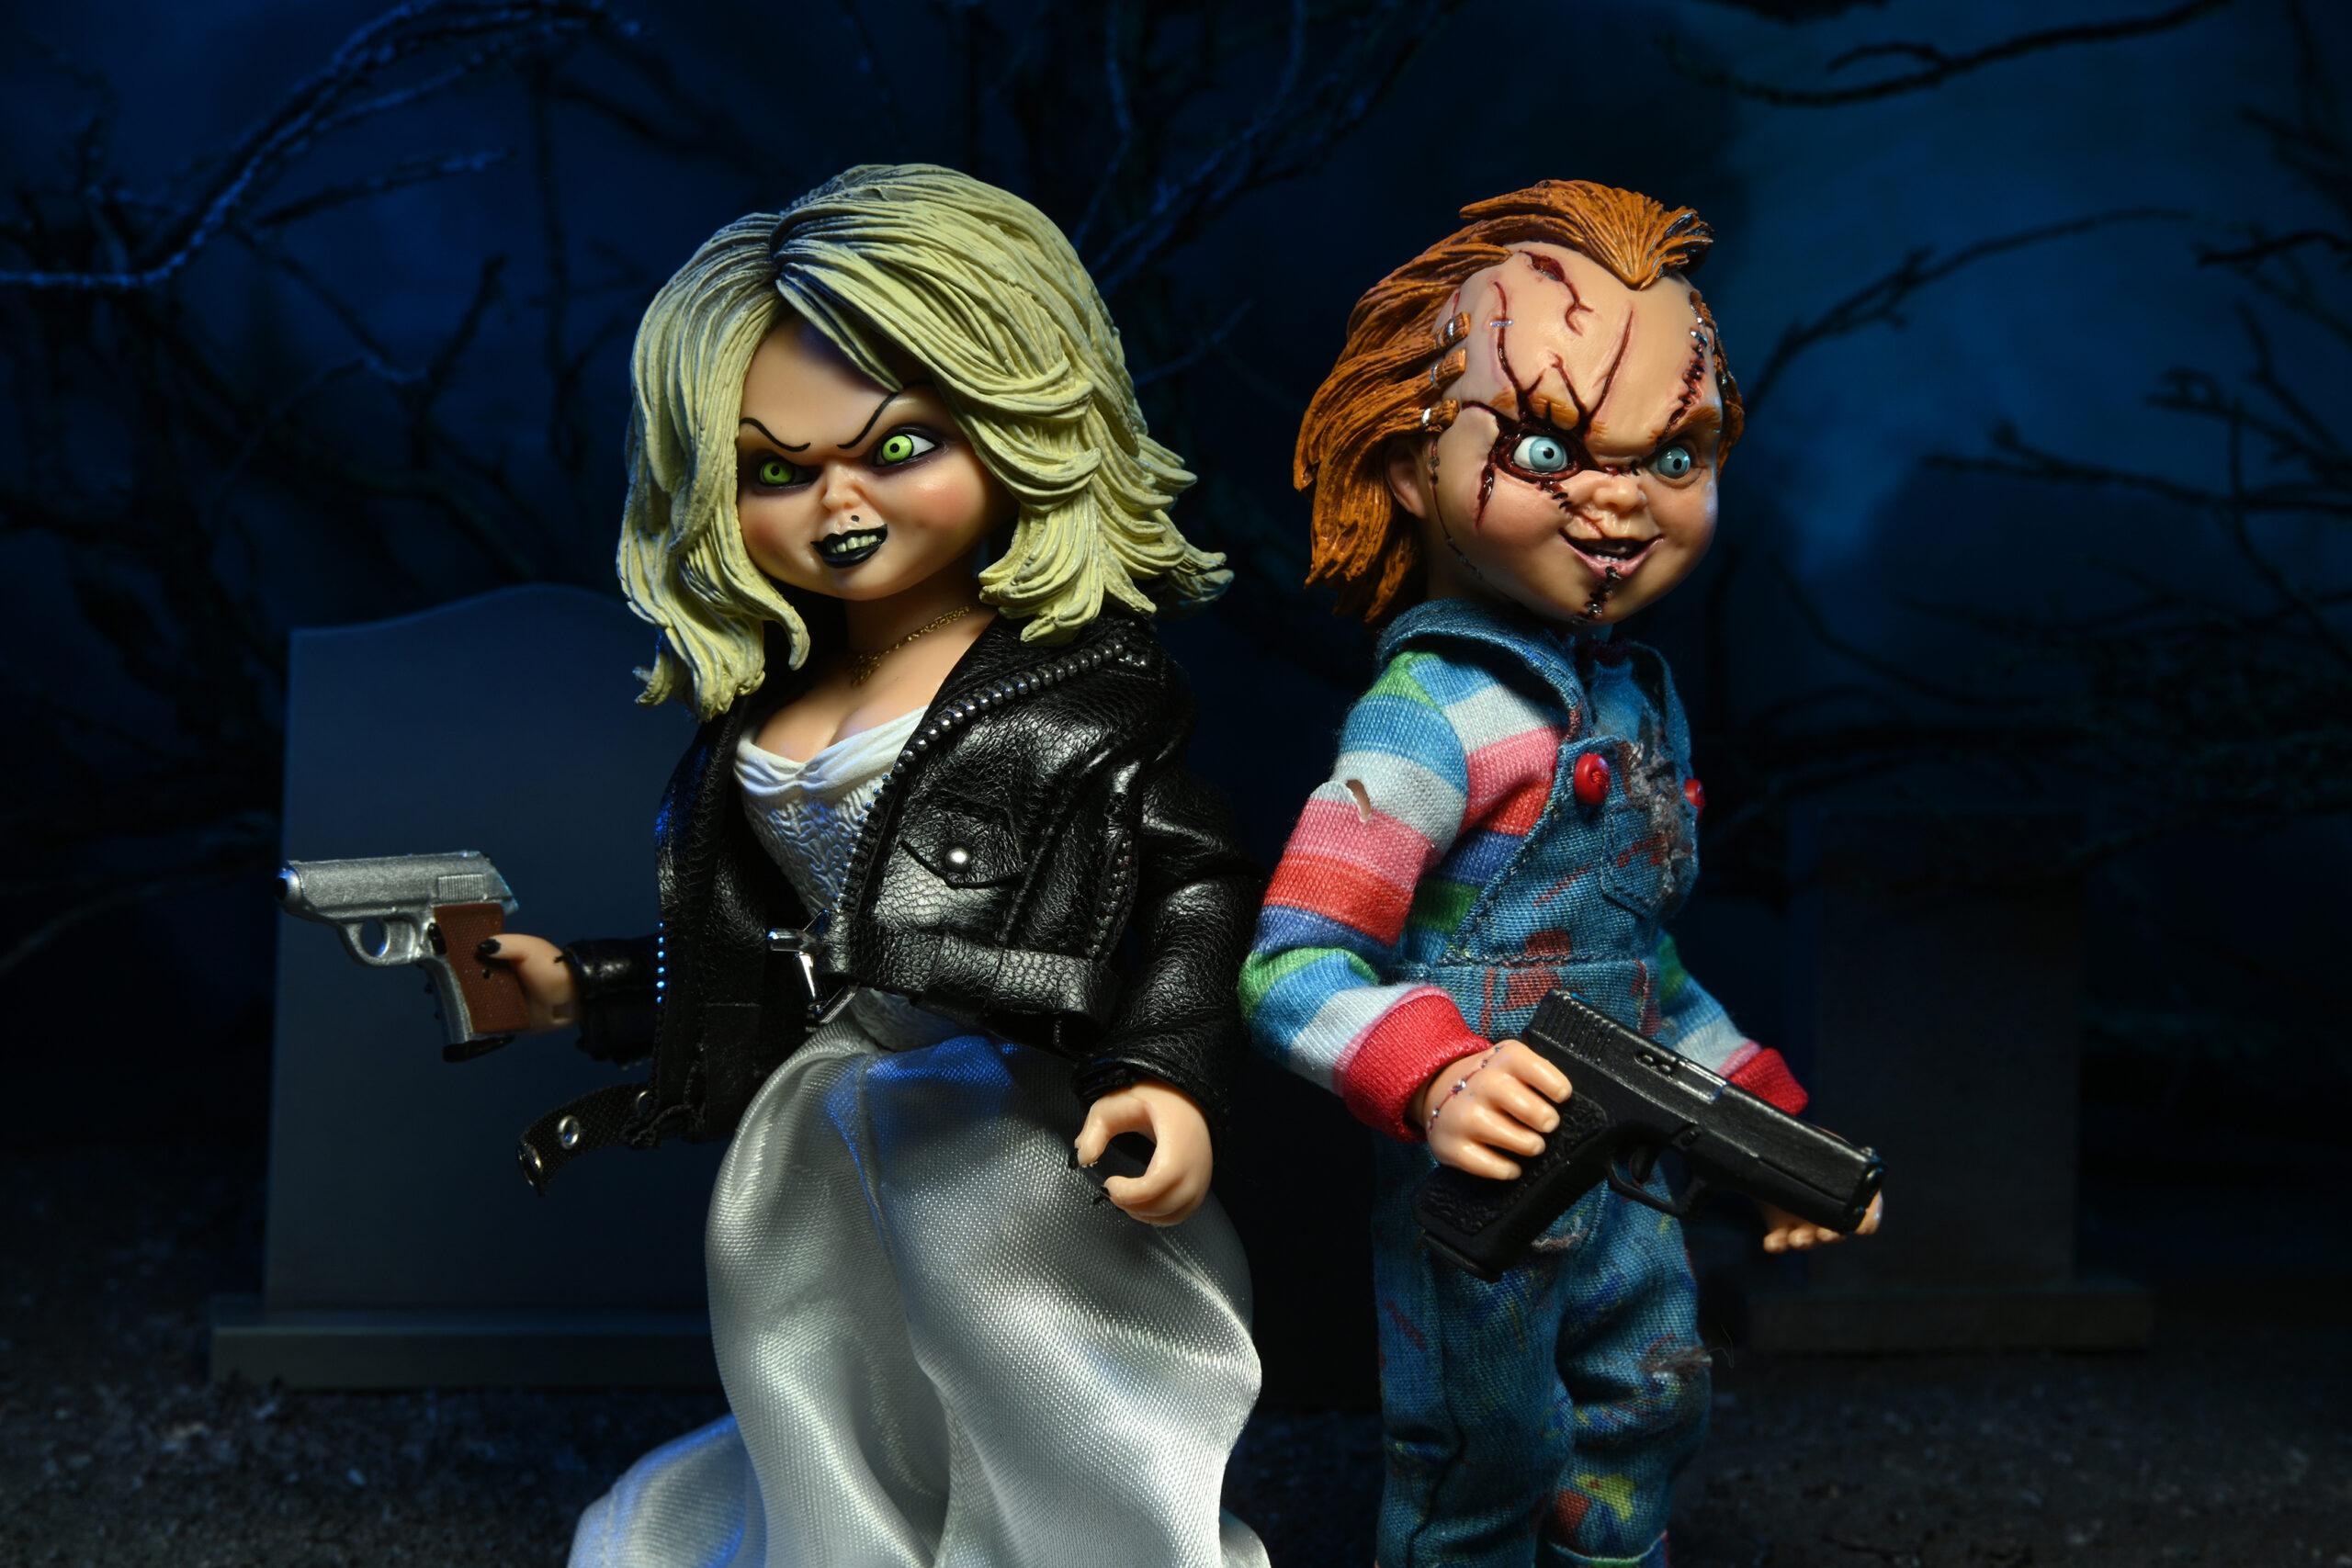 Фигурка Chucky and Tiffany - Neca Bride of Chucky Clothed Figure 2-Pack.